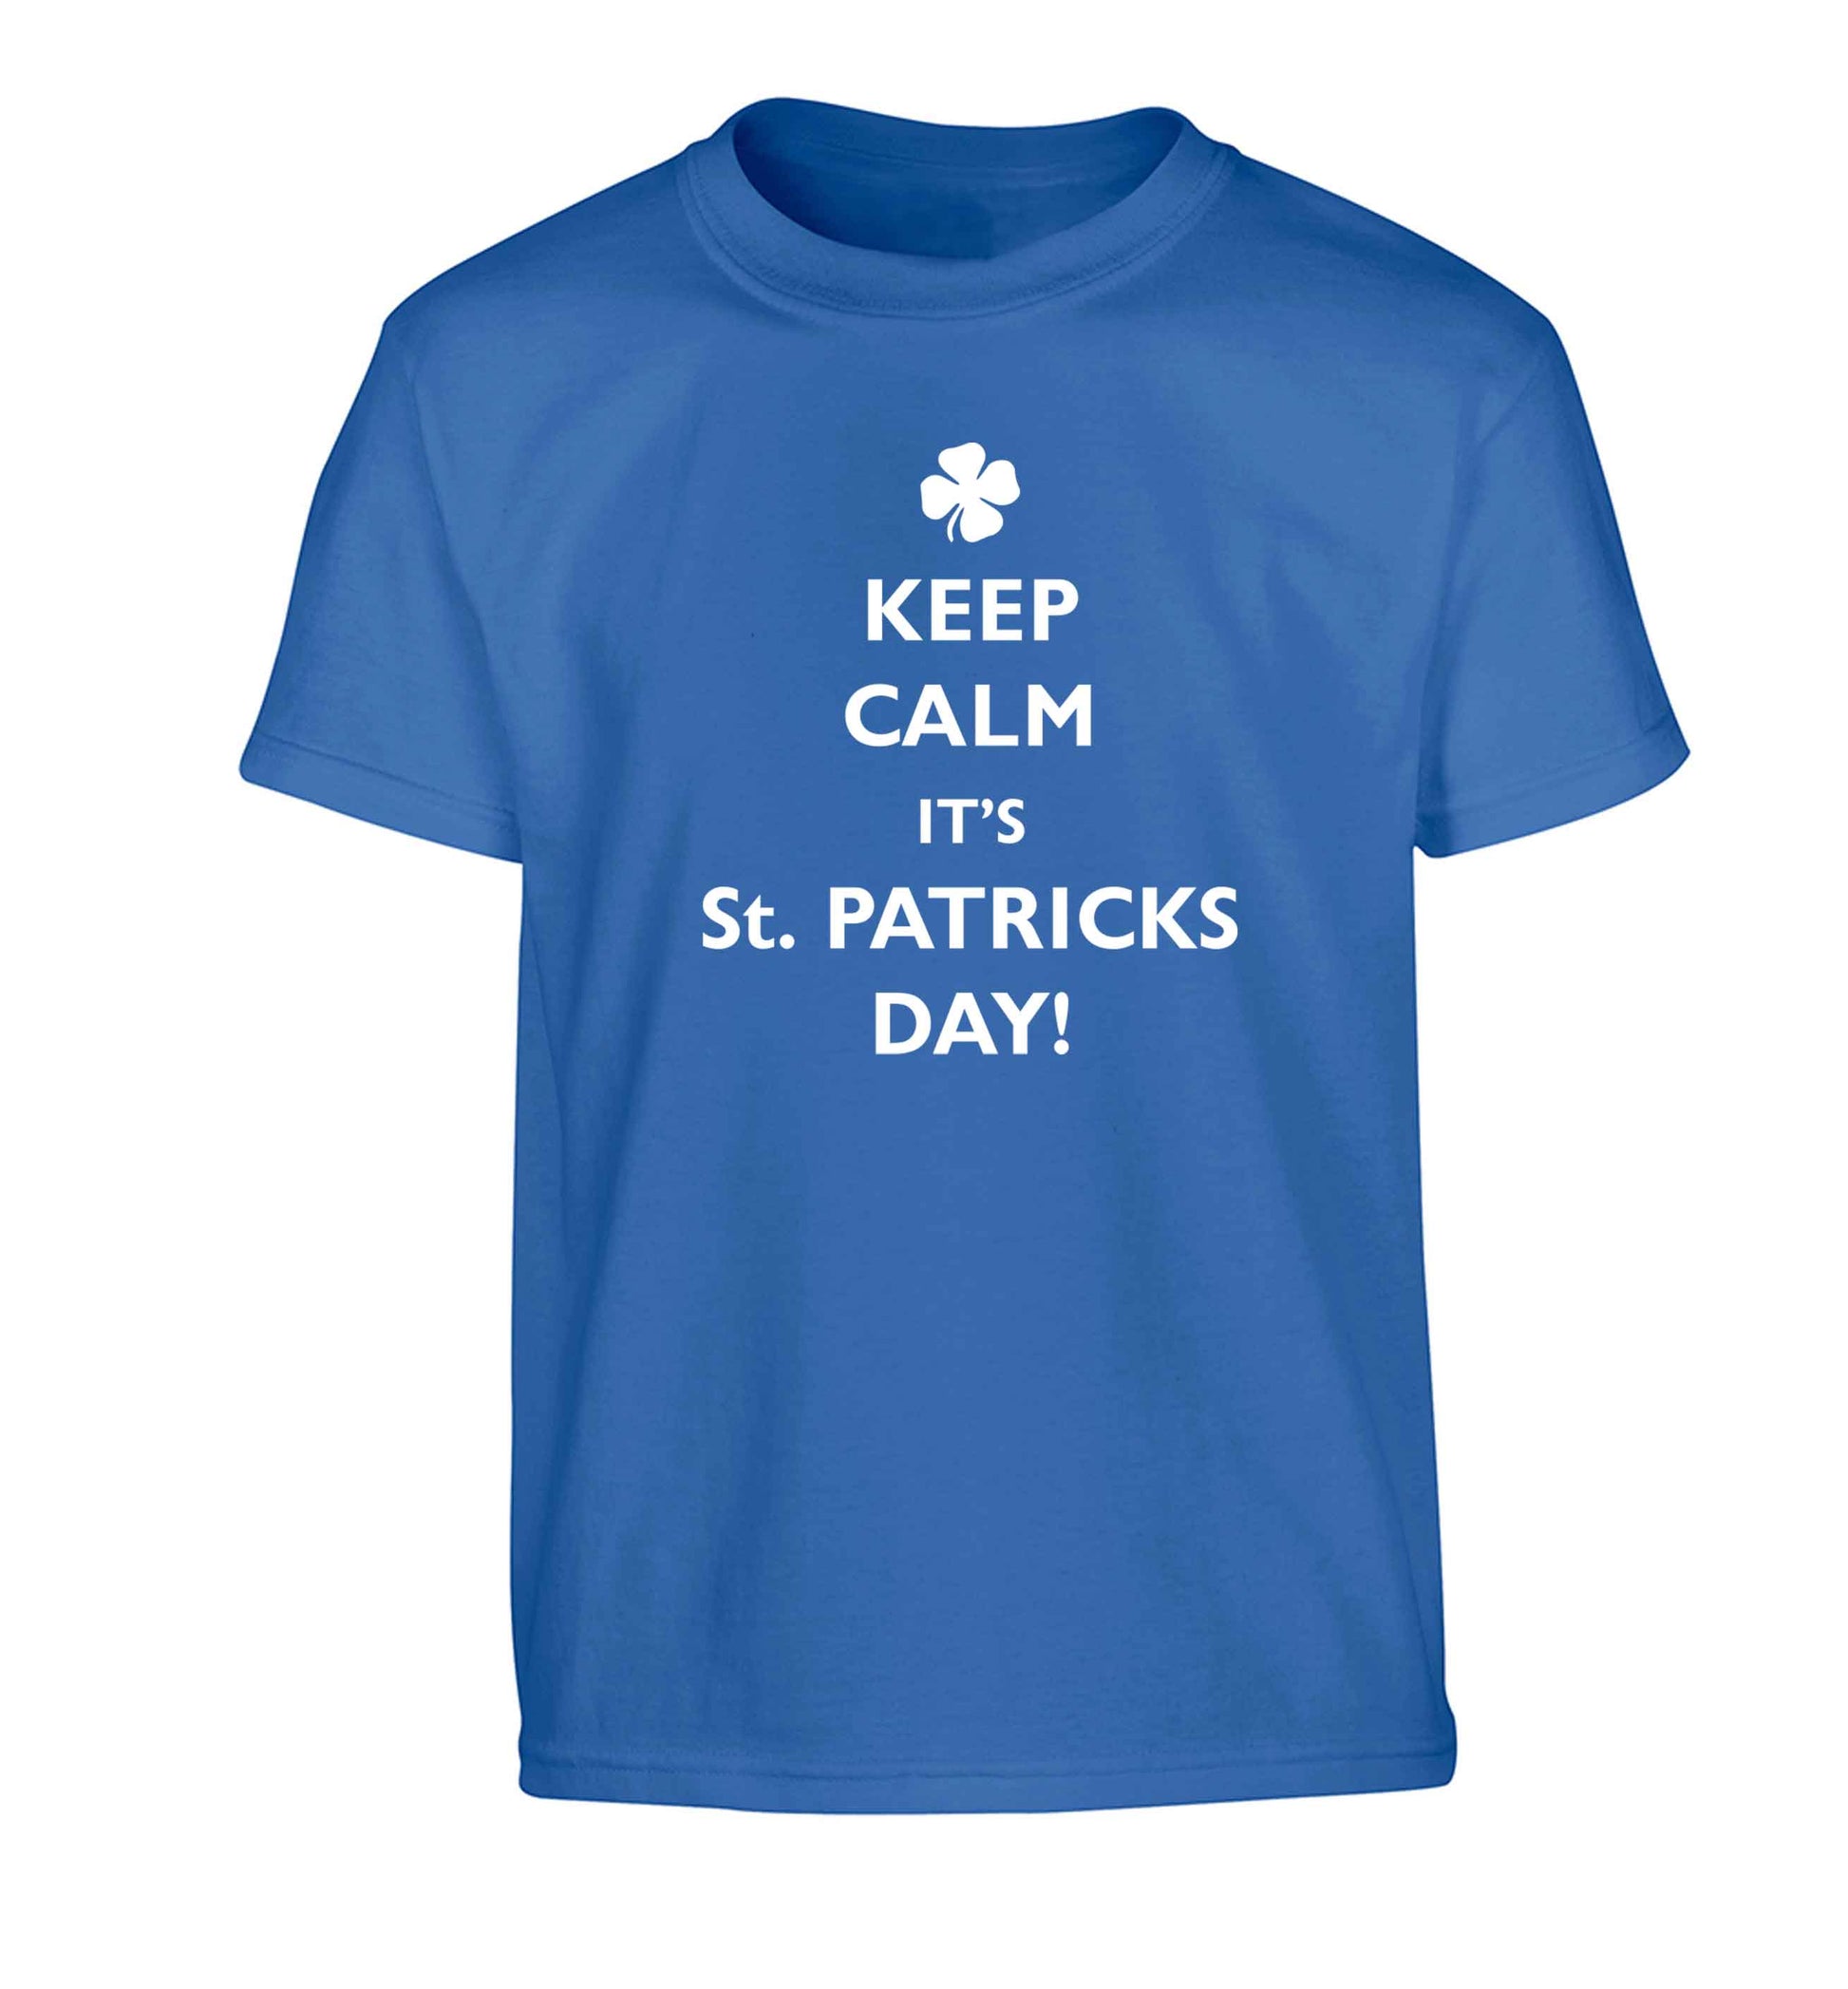 Keep calm it's St.Patricks day Children's blue Tshirt 12-13 Years